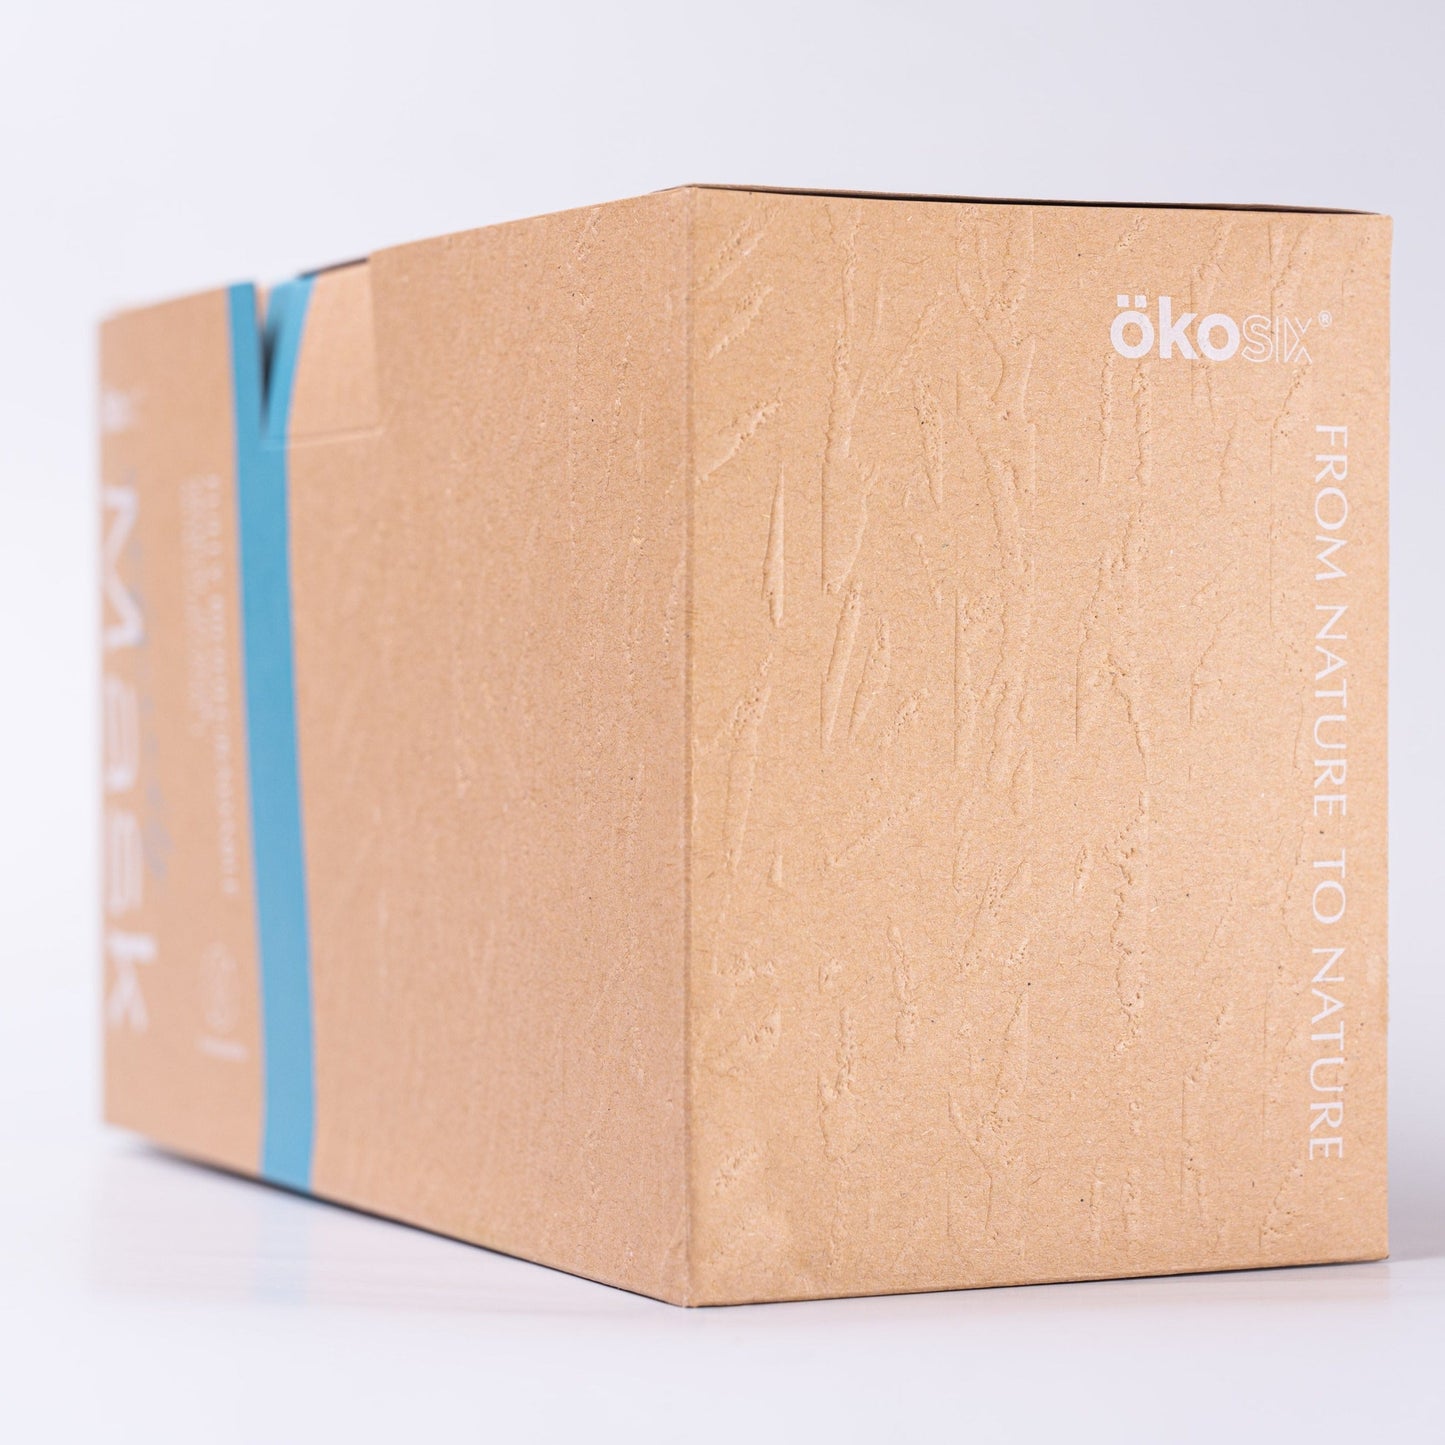 ÖKOSIX® 可完全生物降解Level 3口罩 成人S碼 白色 36個裝